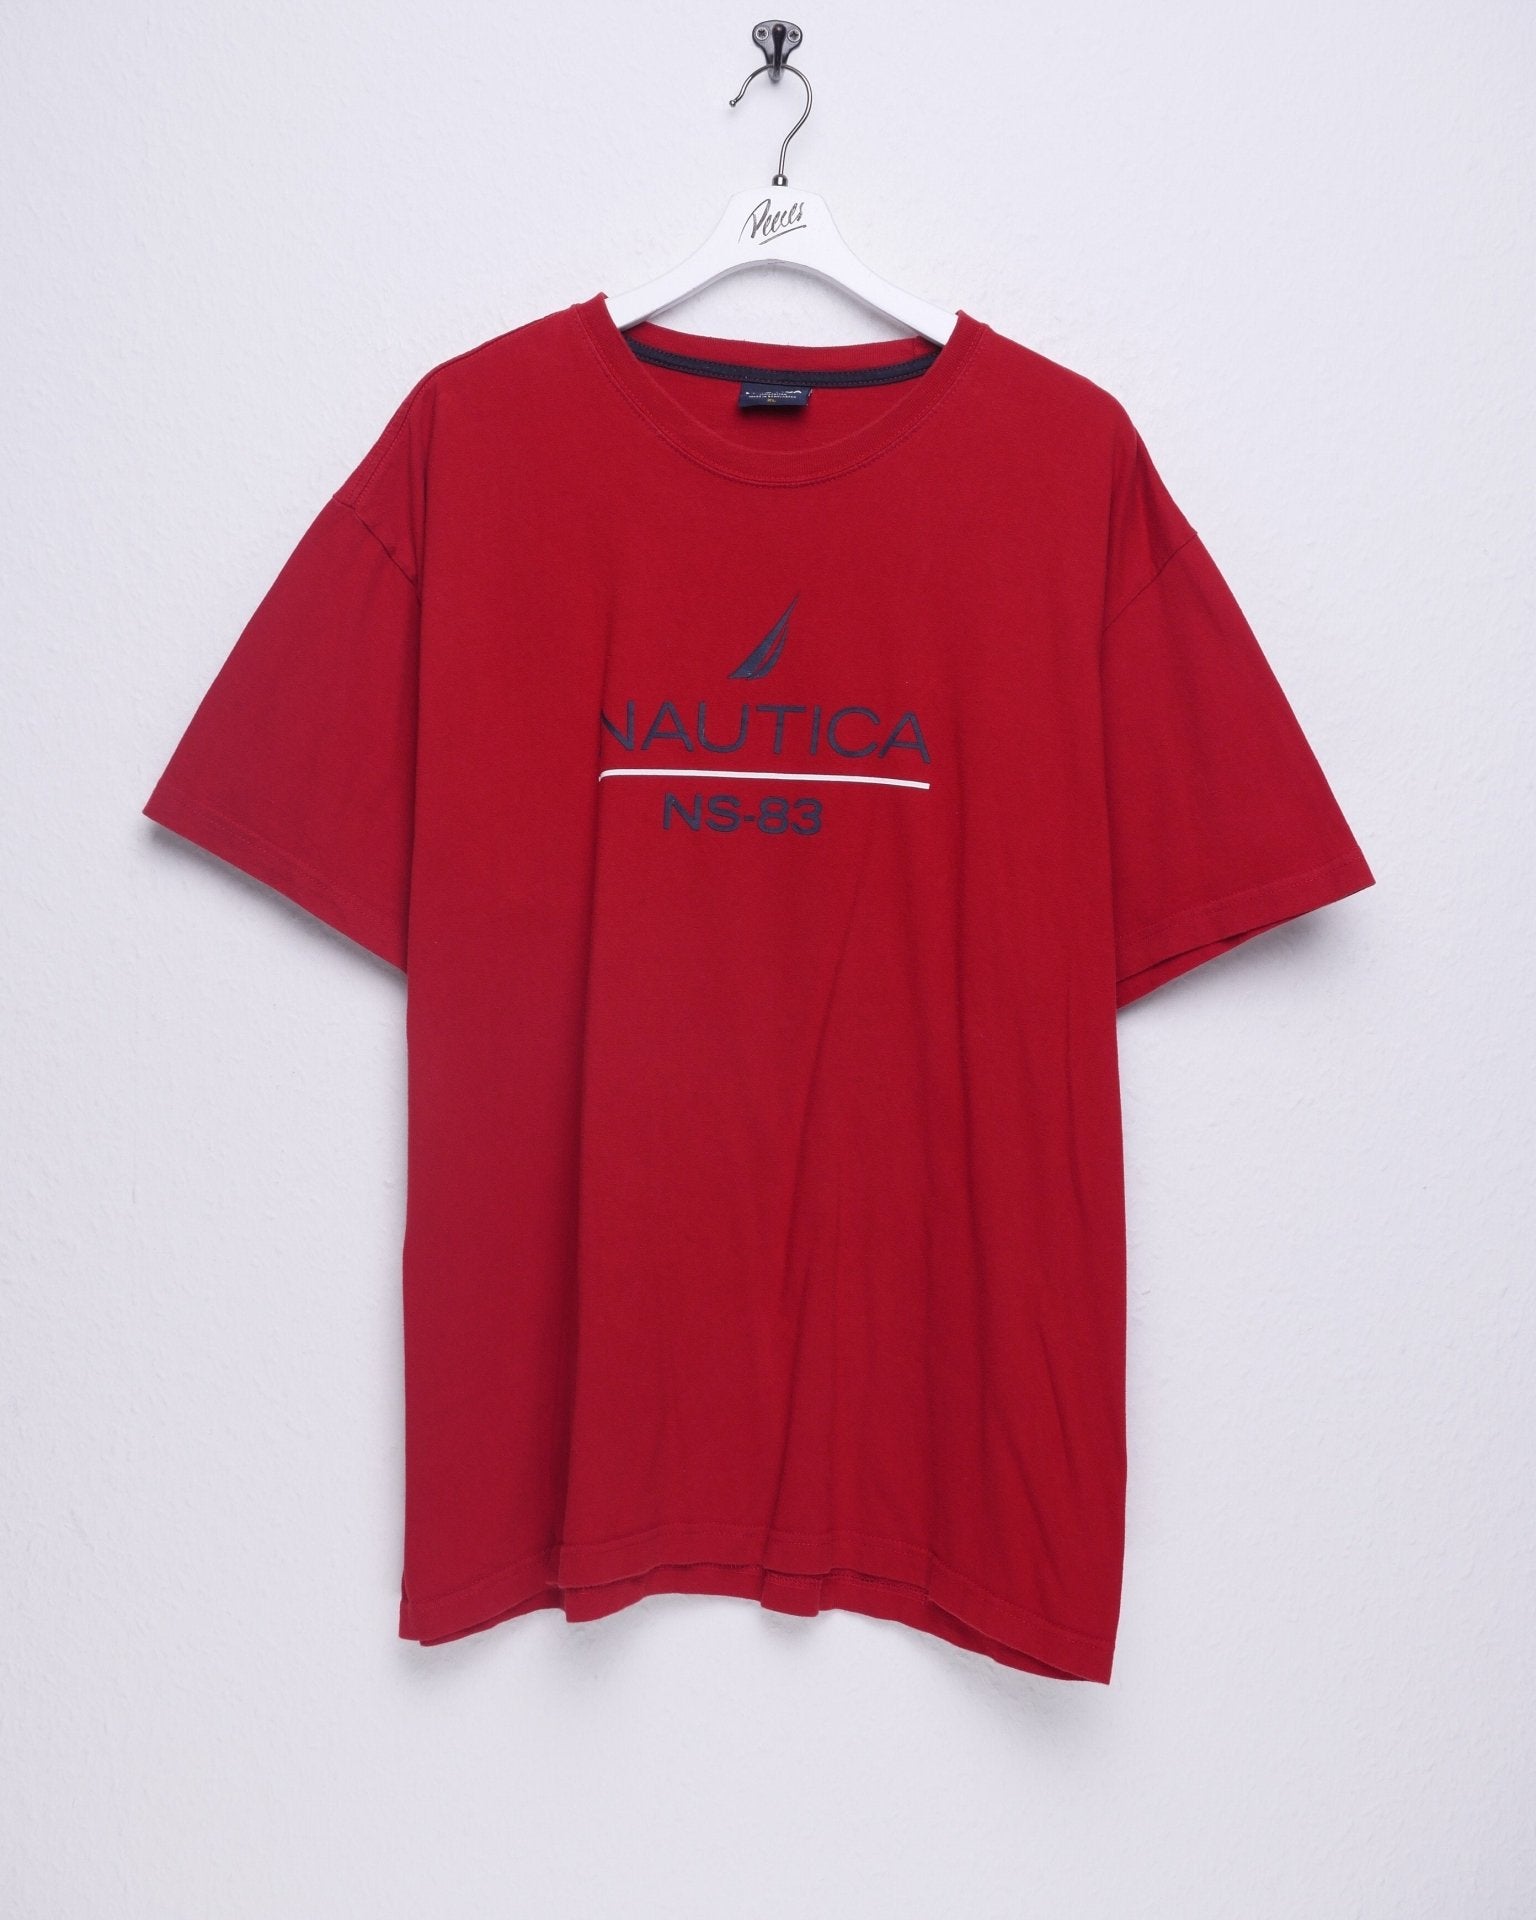 nautica printed Logo red Shirt - Peeces